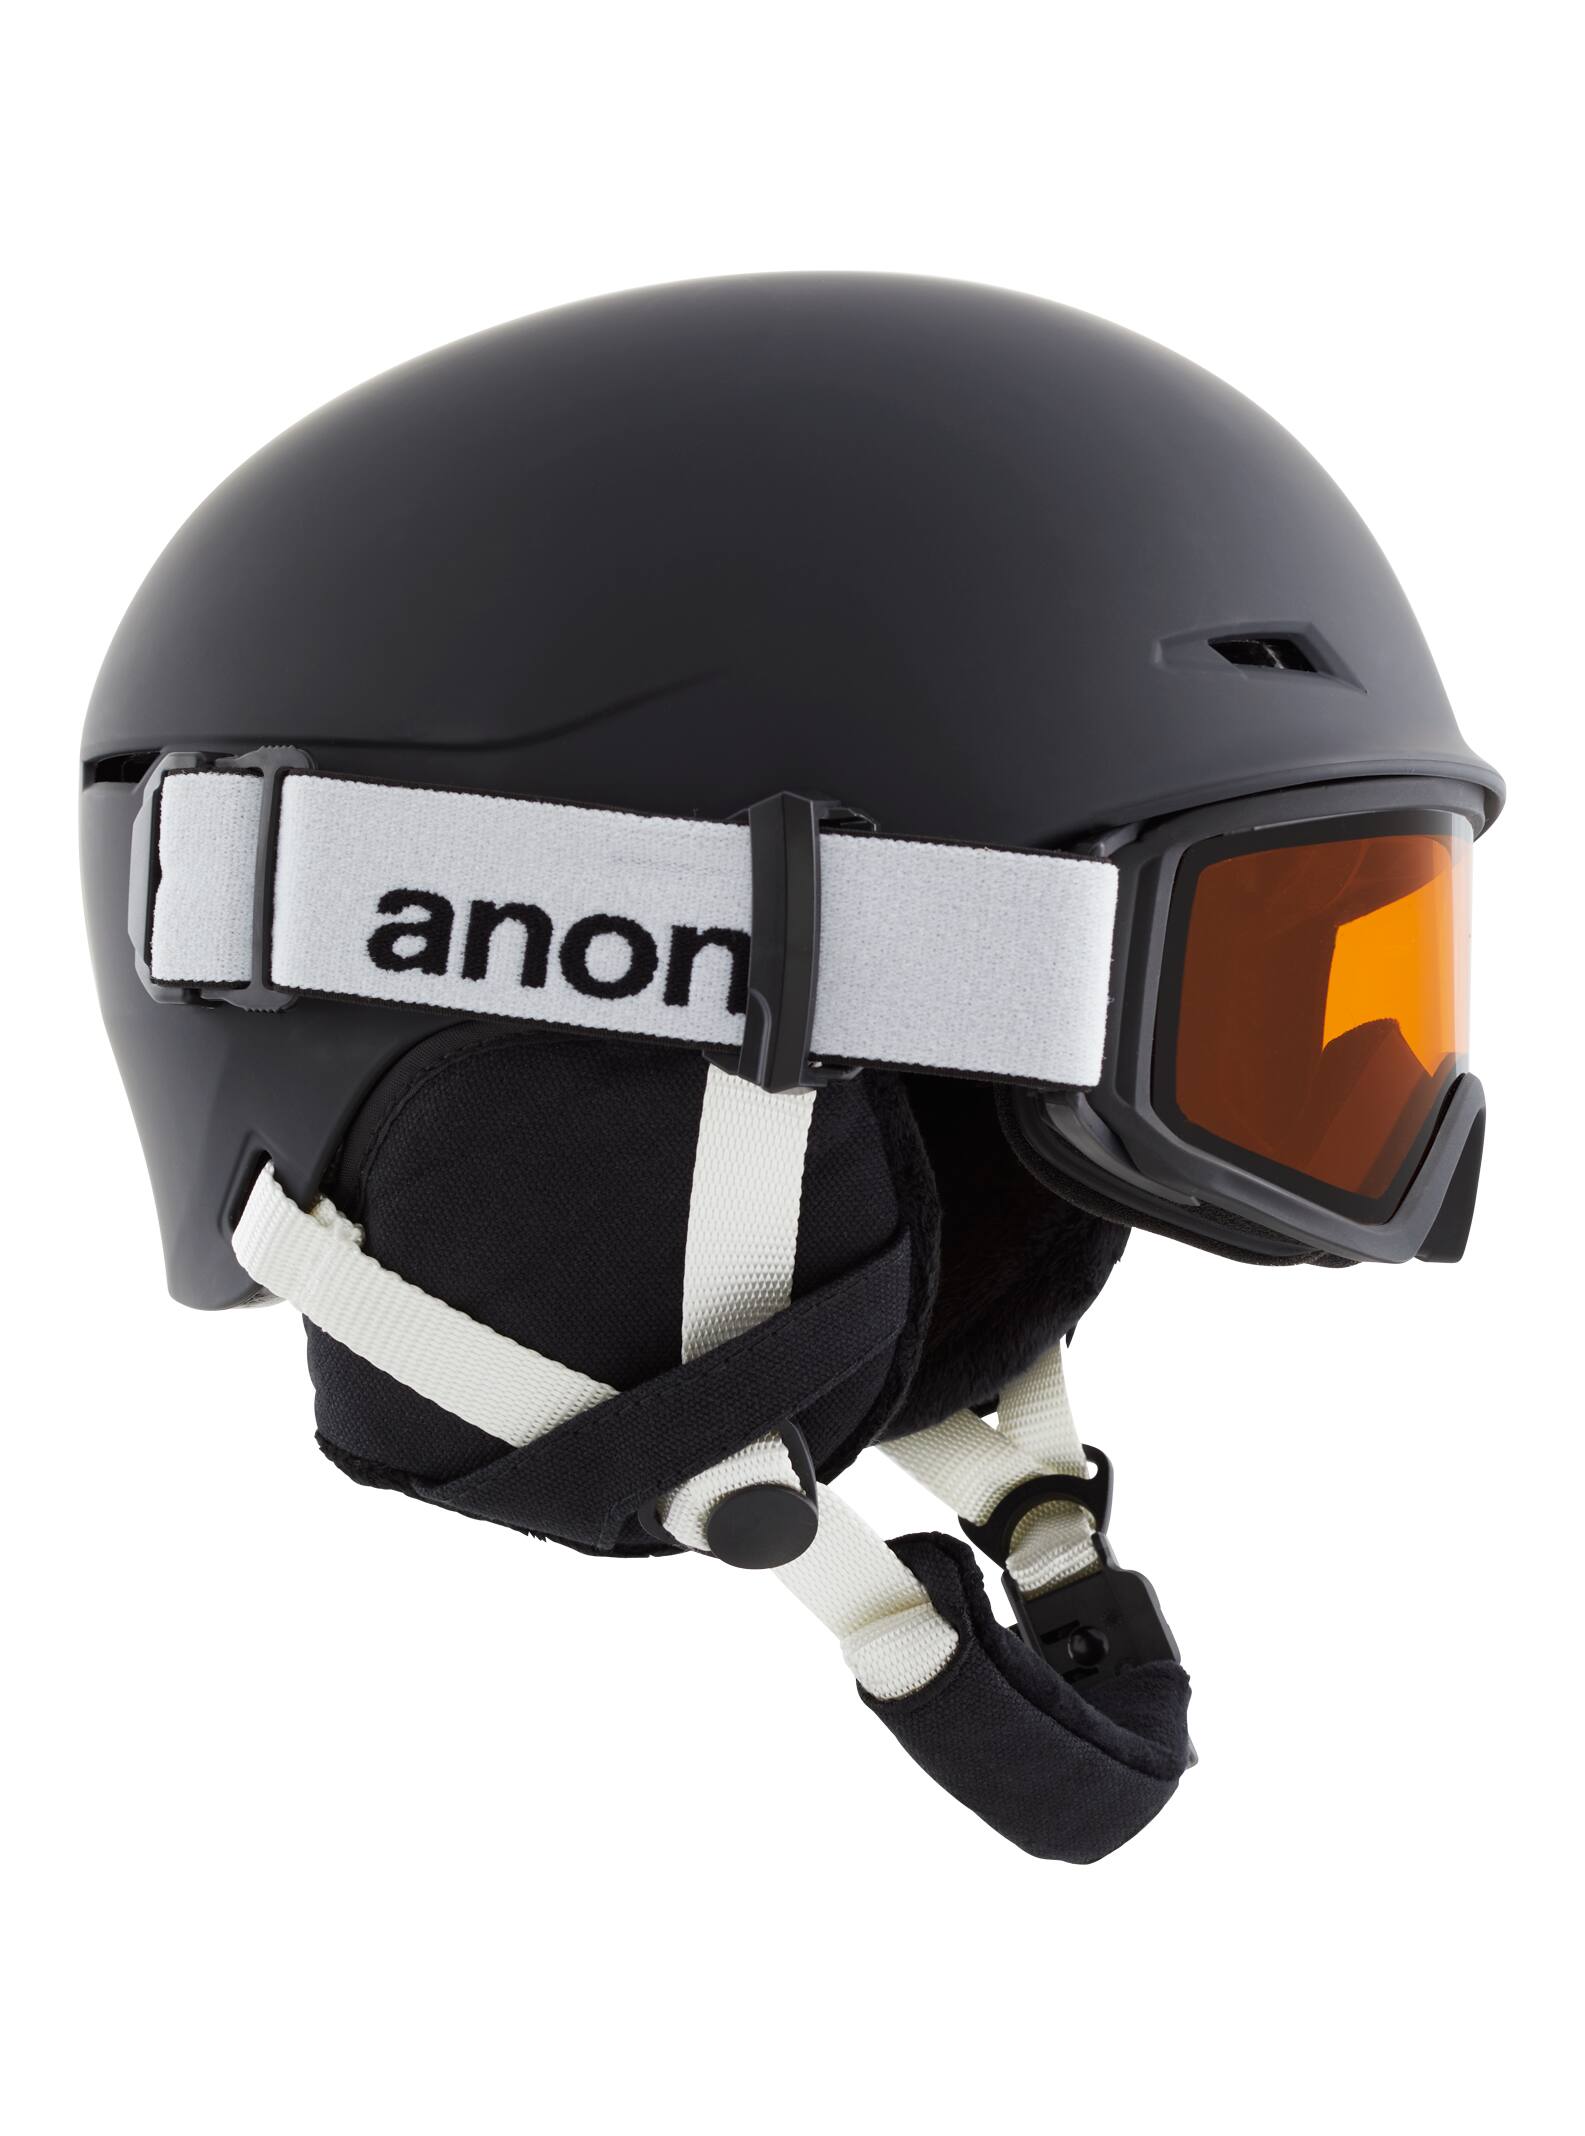 Details about   Anon Burner Kids Ski Helmet Snowboard Winter Sports Protection 